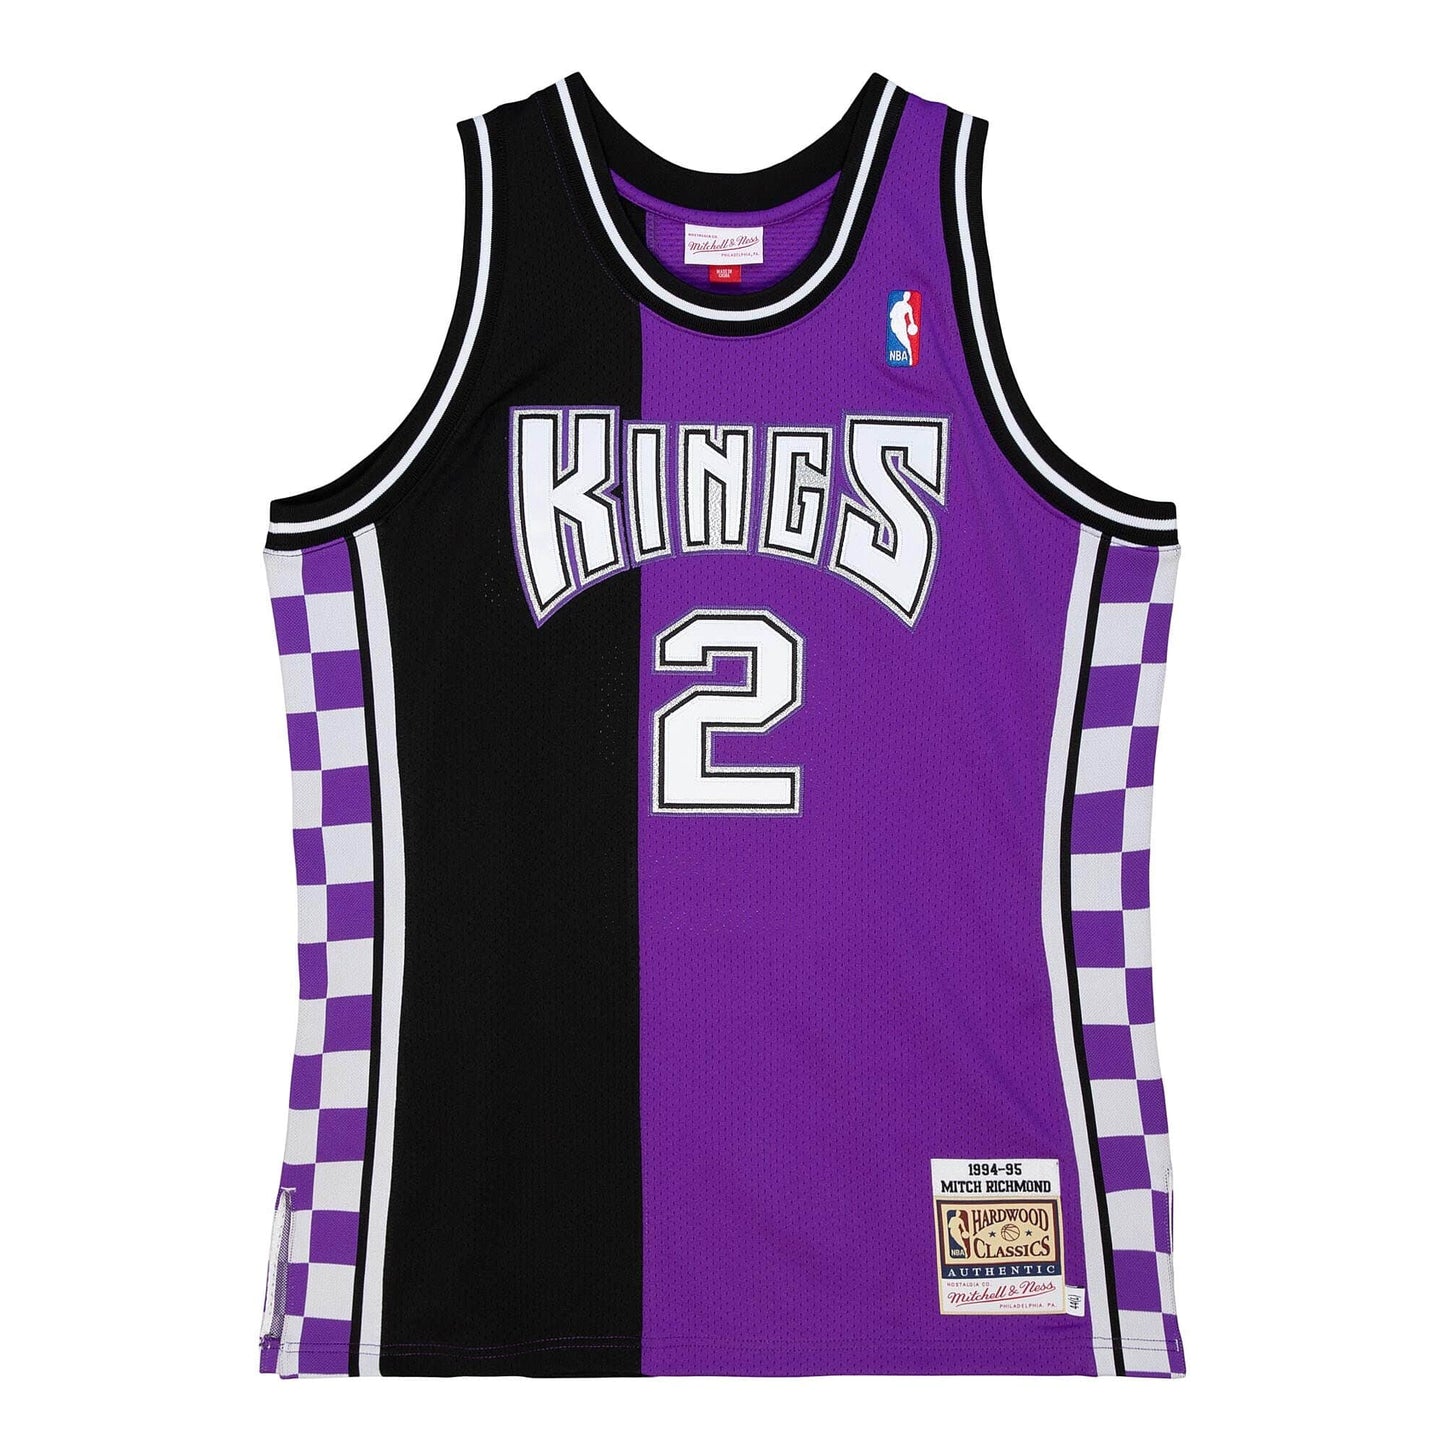 Authentic Mitch Richmond Sacramento Kings 1994-95 Jersey